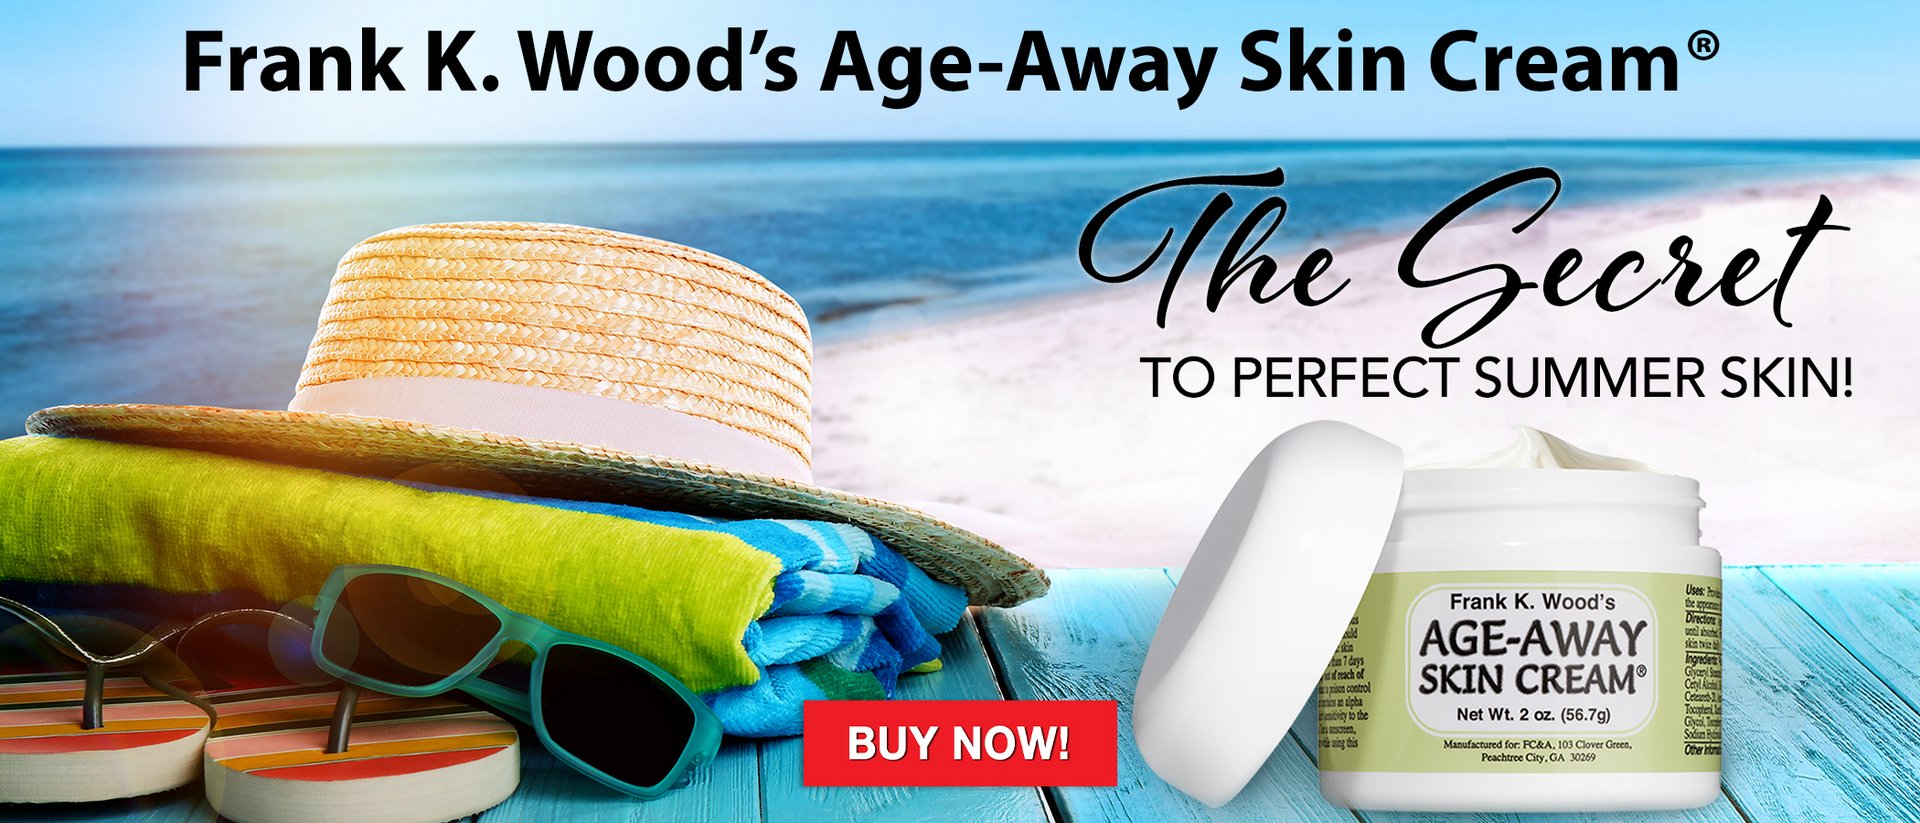 Frank K. Wood's Age-Away Skin Cream